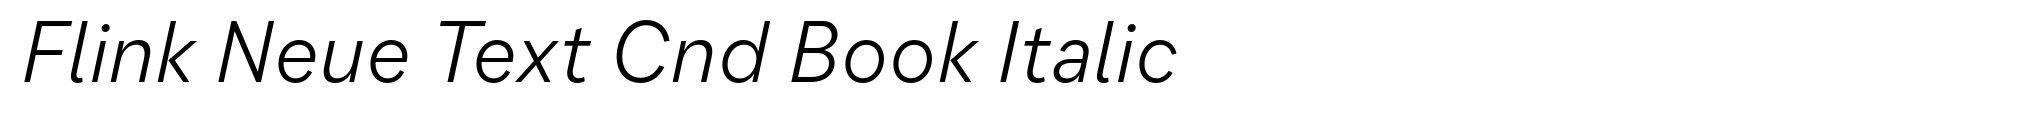 Flink Neue Text Cnd Book Italic image